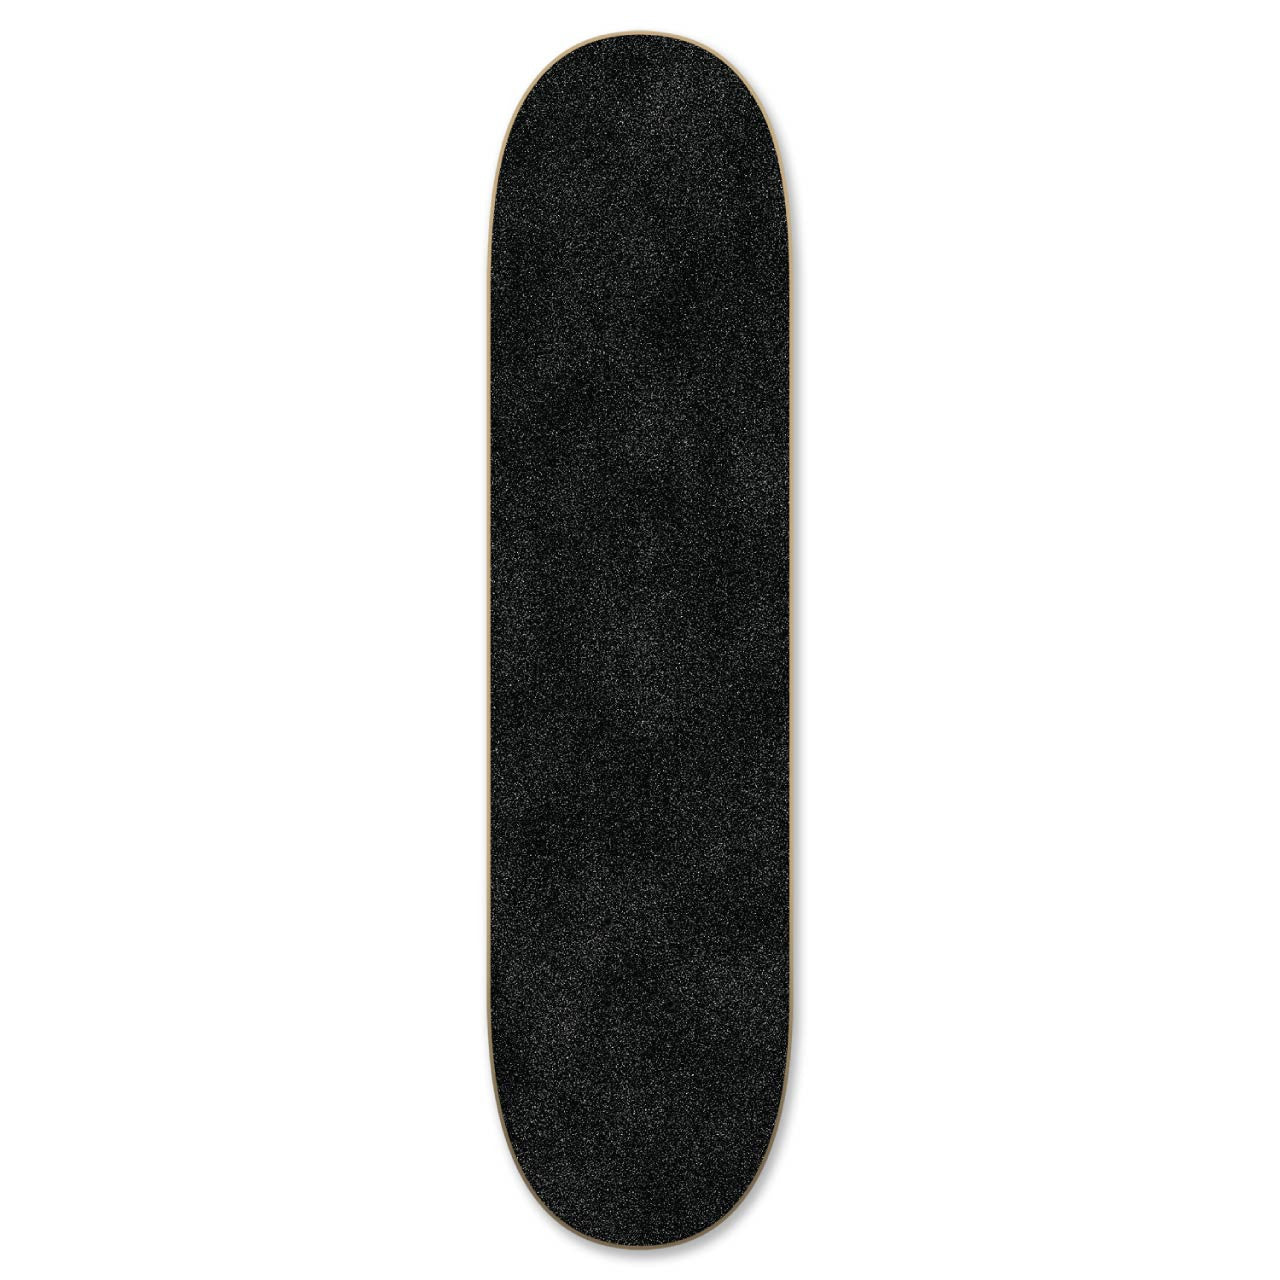 Yocaher Graphic Skateboard Deck  - PIKA Series - Bulbi